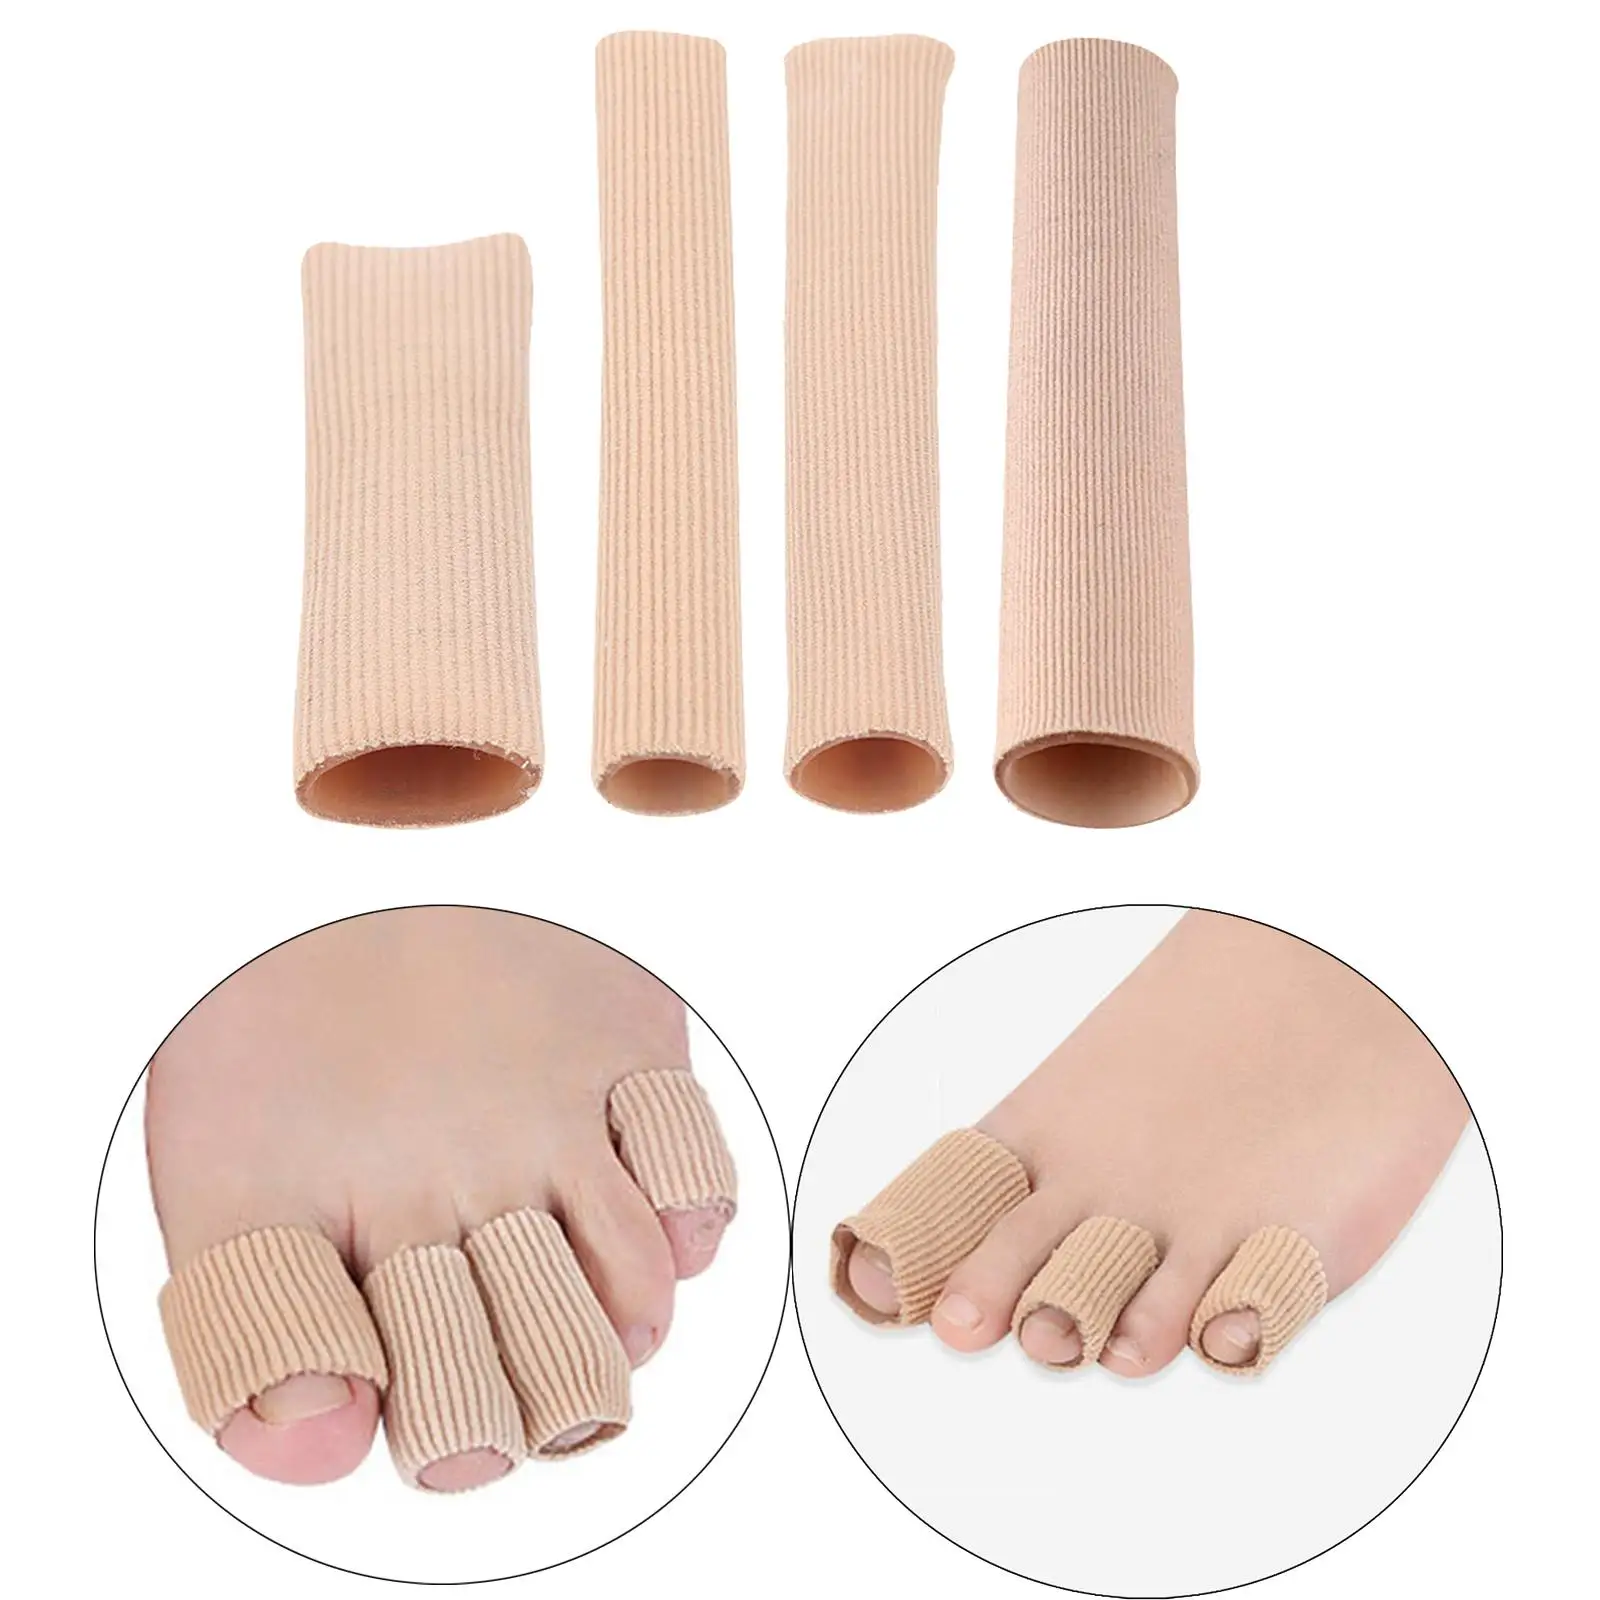 5 Pieces Soft Finger Toe Tube Protectors Foot Cover Relief Toe Pressure Sleeve Brace Elastic for Men Blister Corns Bunion Women